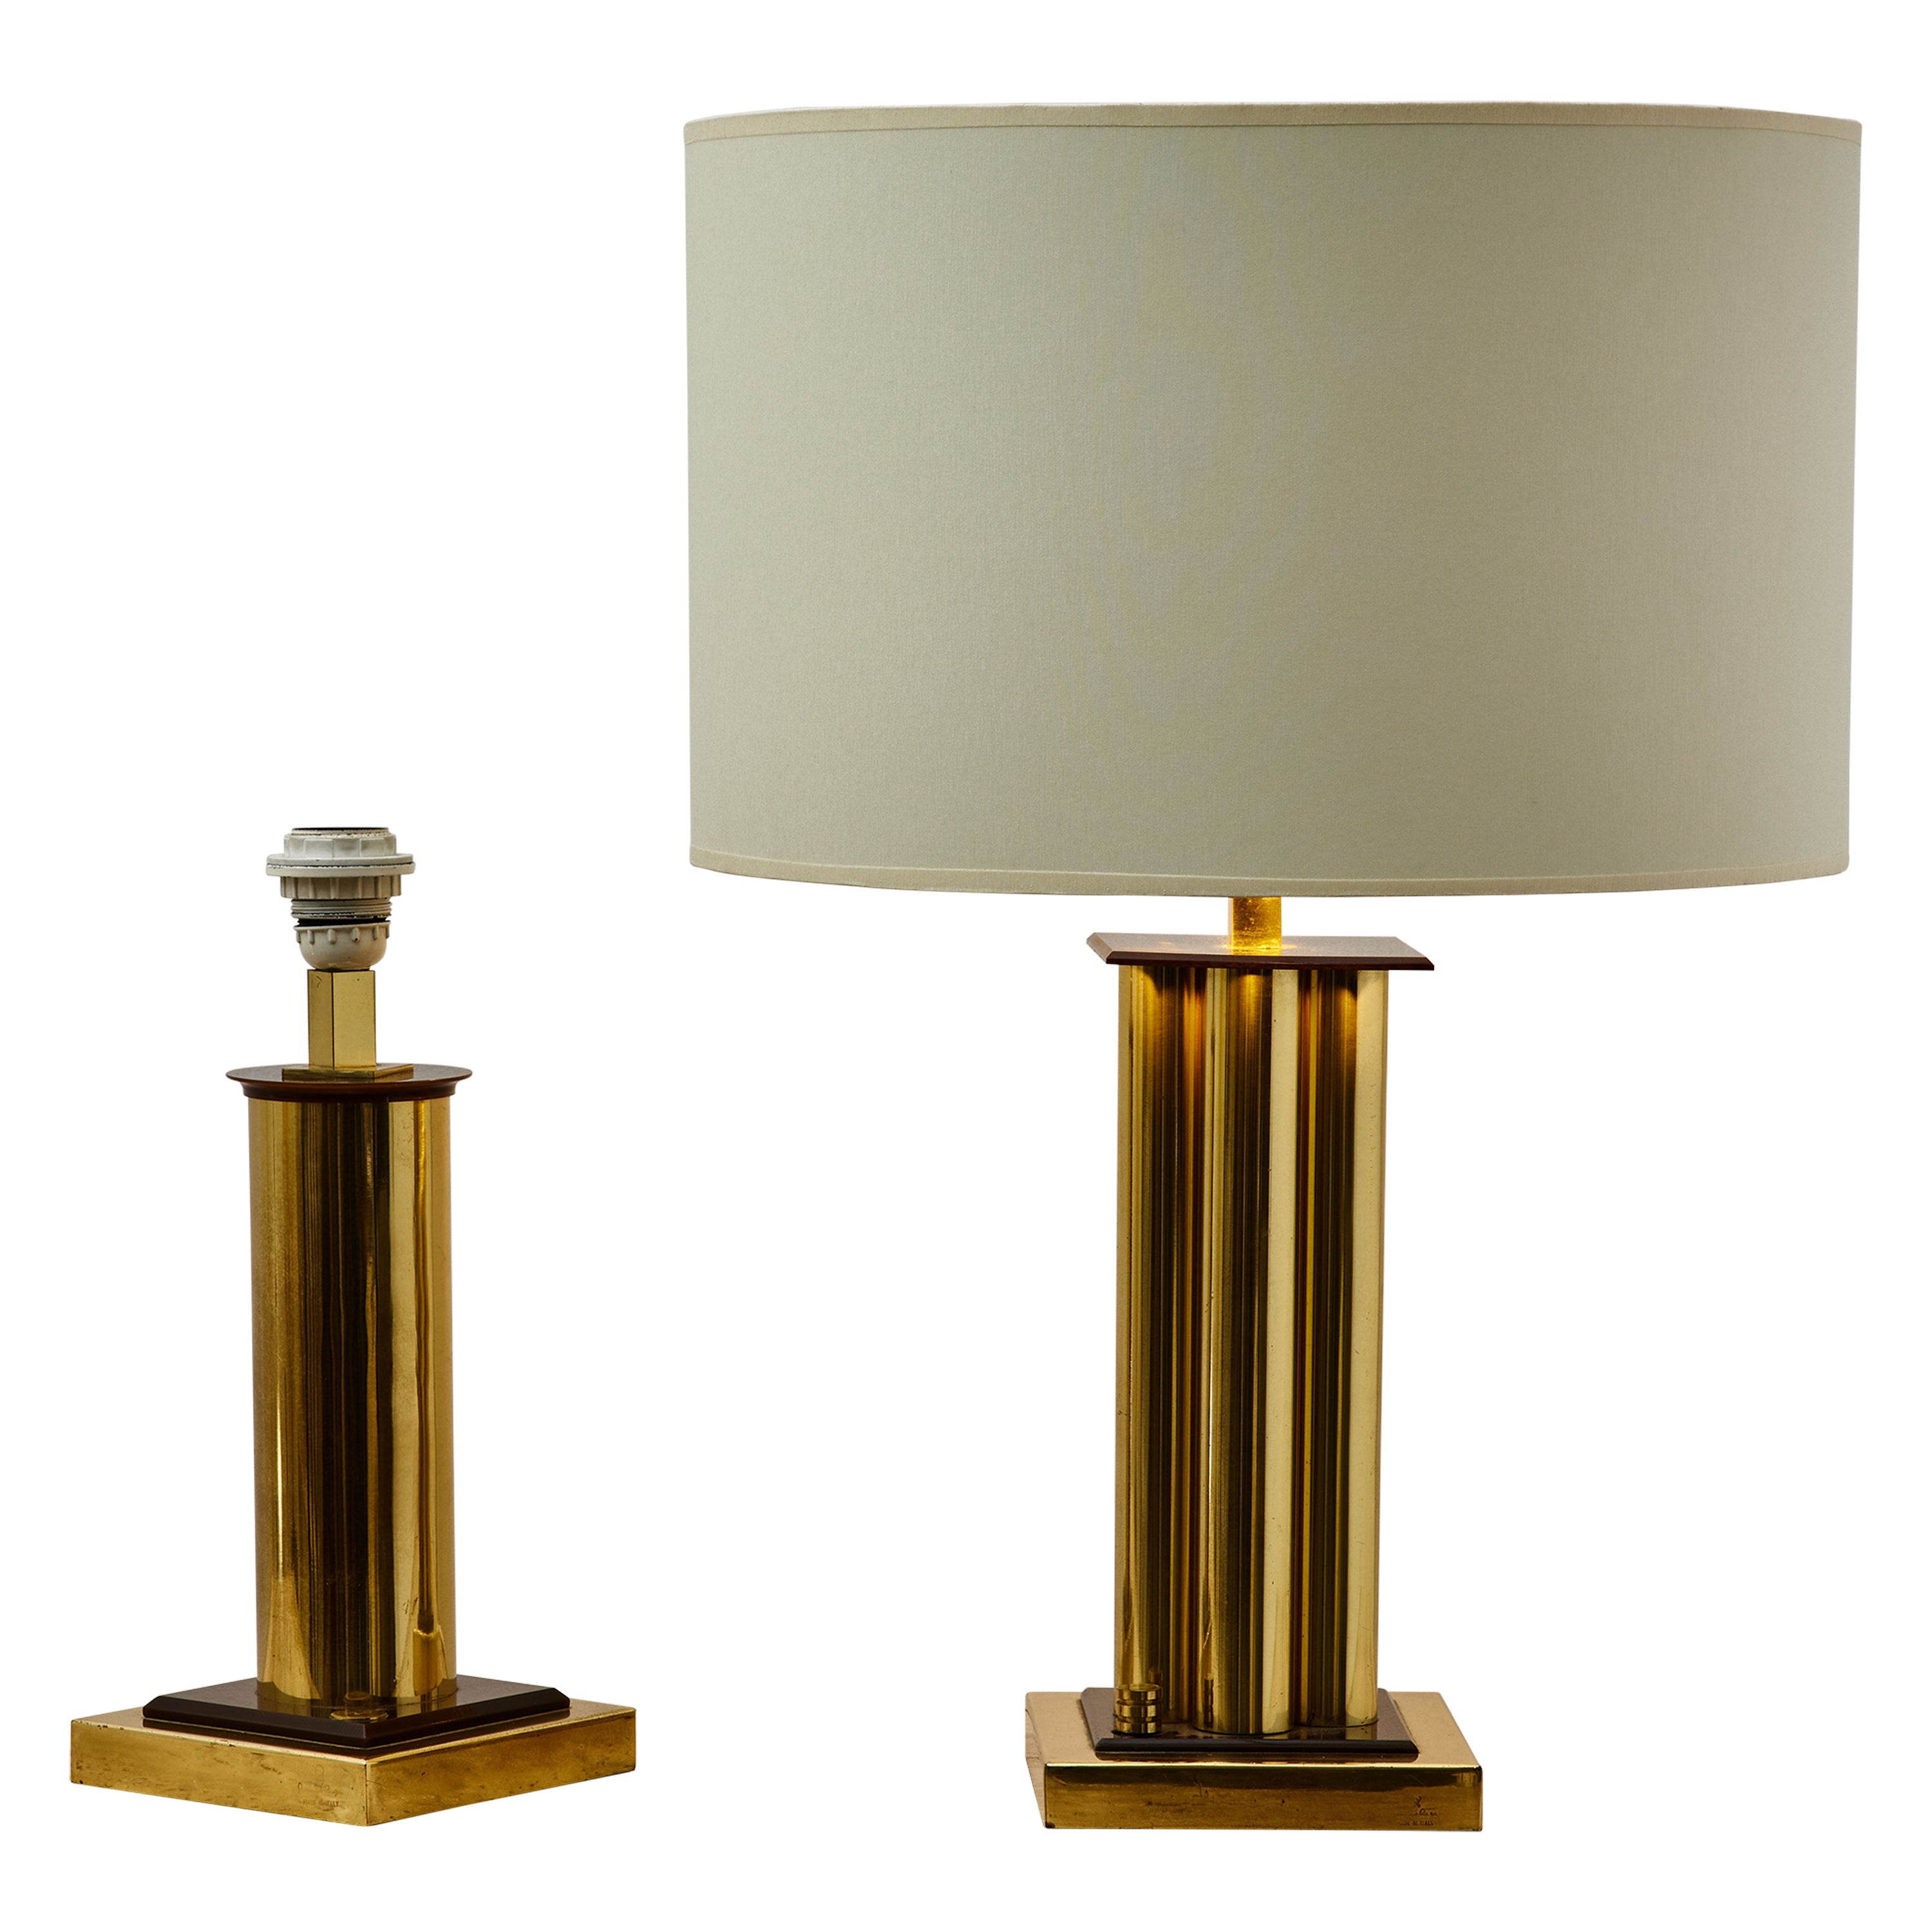 Rare table lamps by Romeo Rega At Cost Price